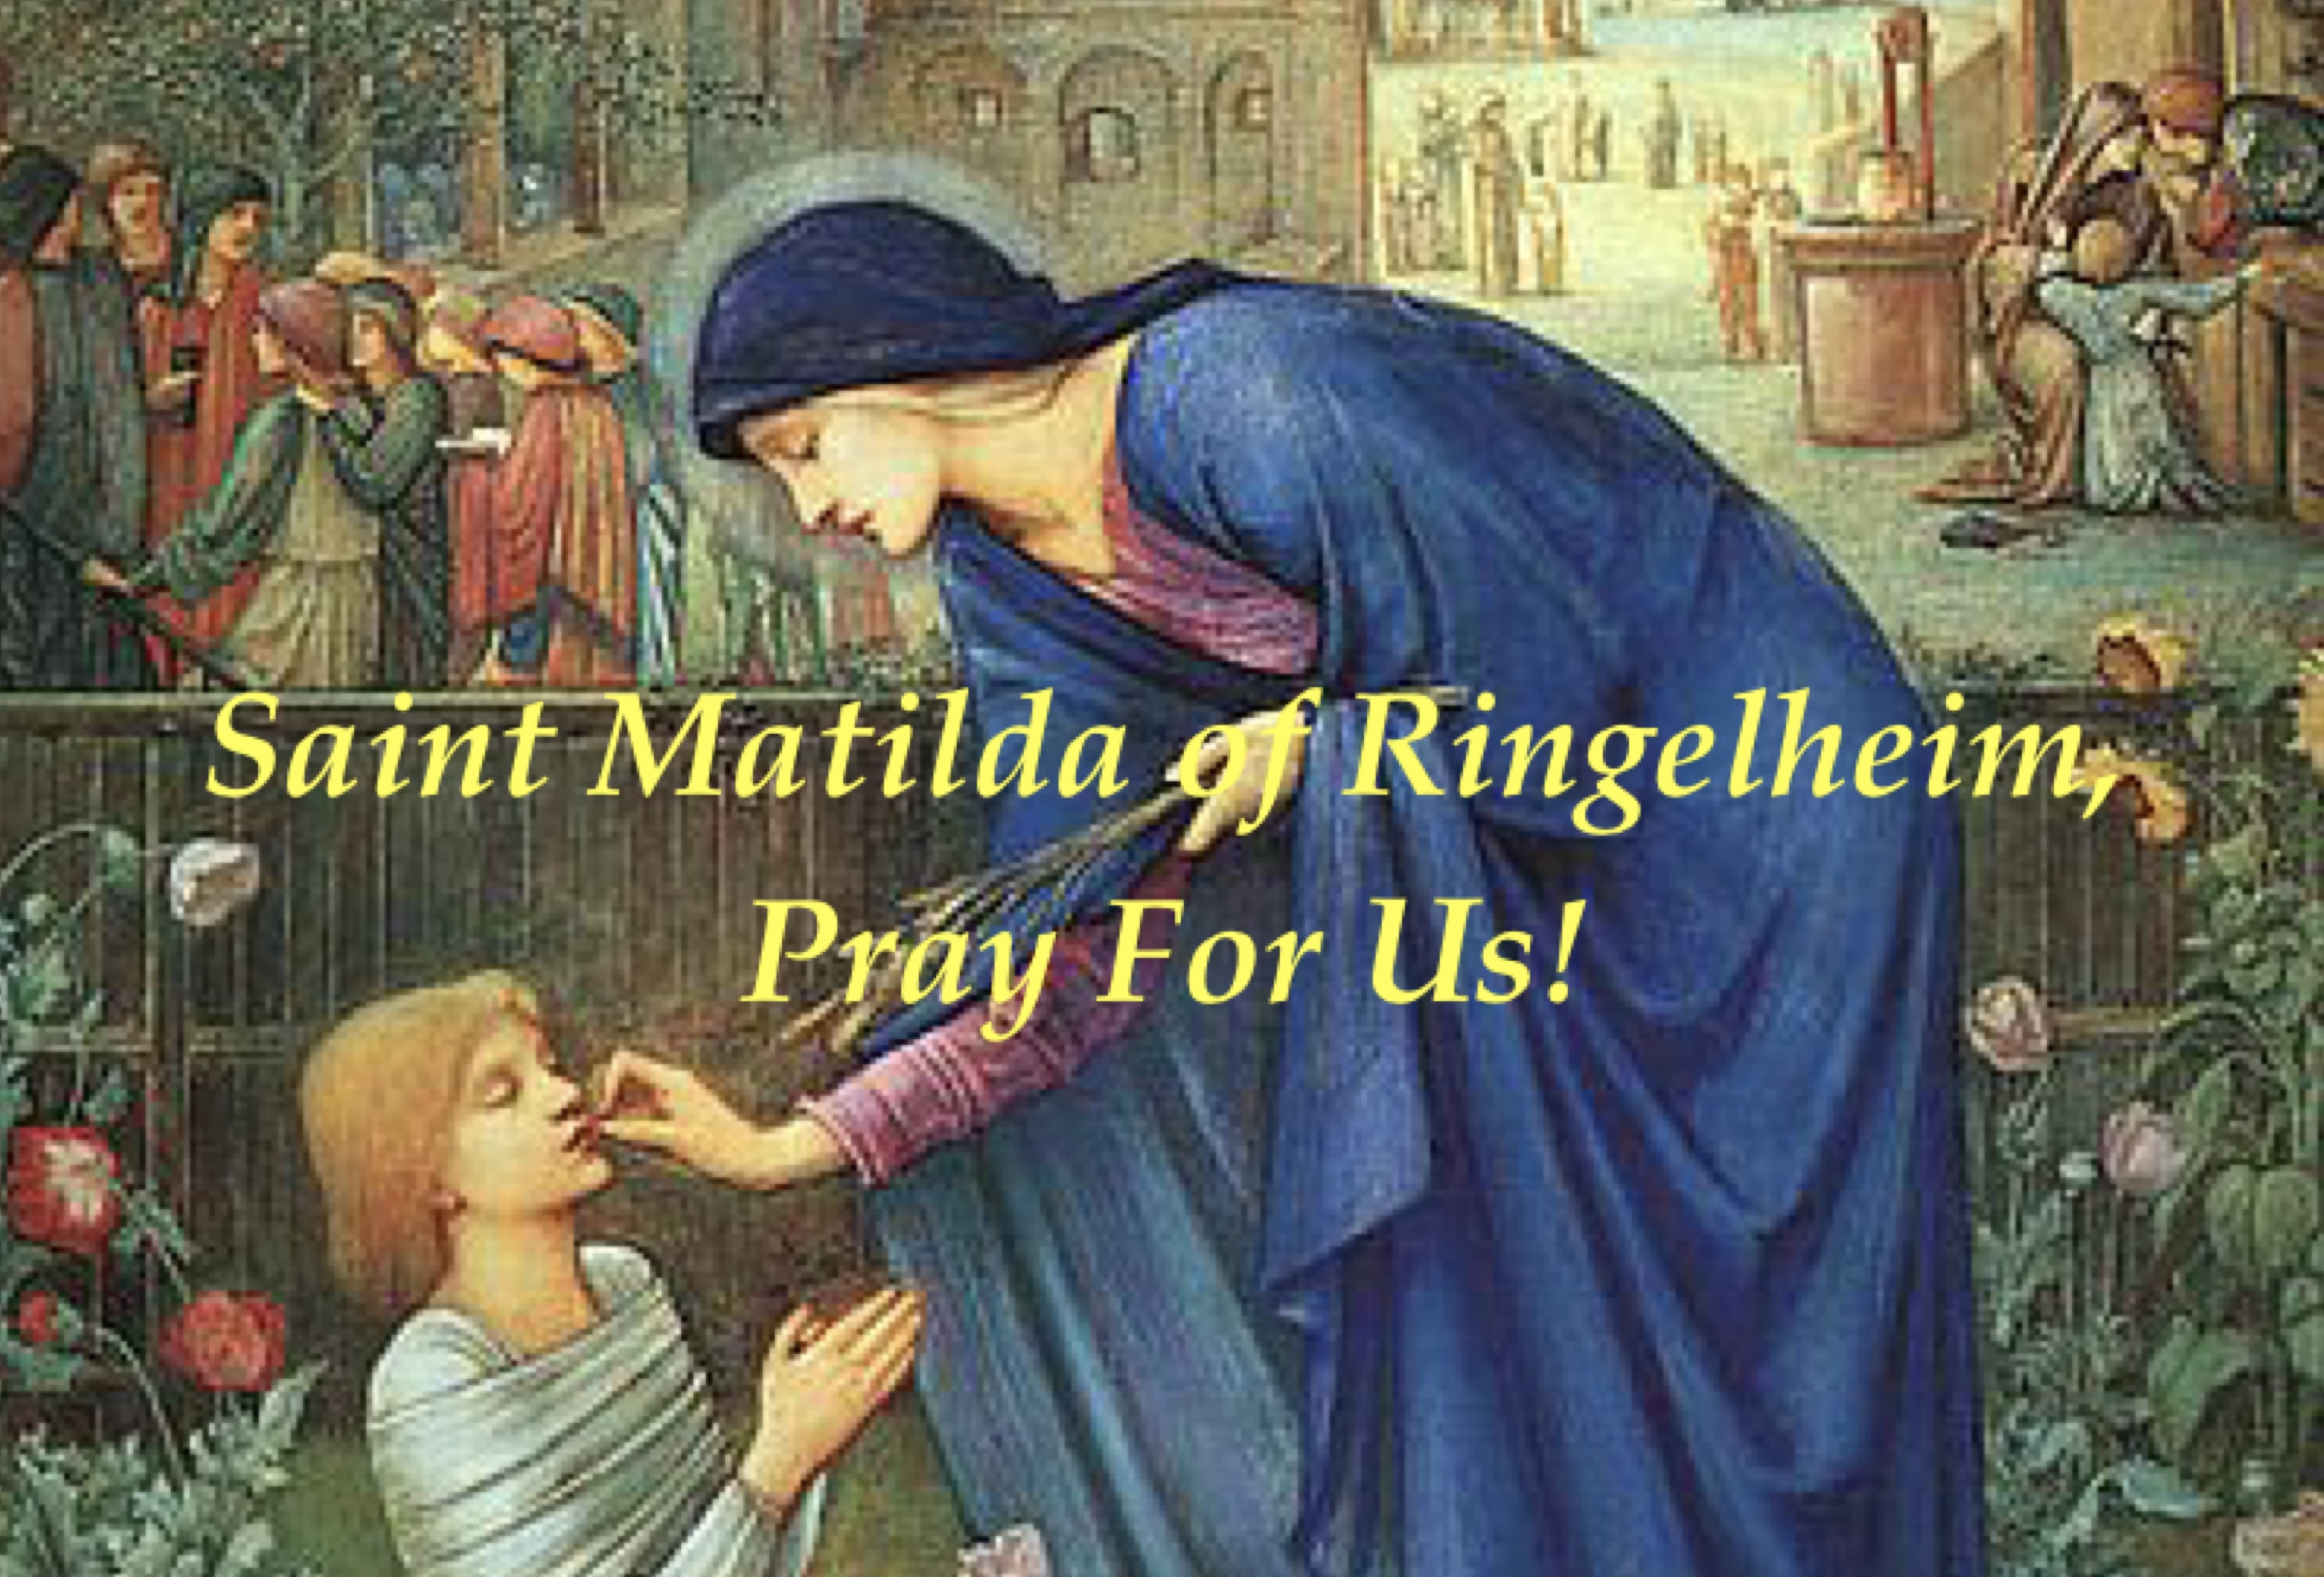 14th March - Saint Matilda of Ringelheim